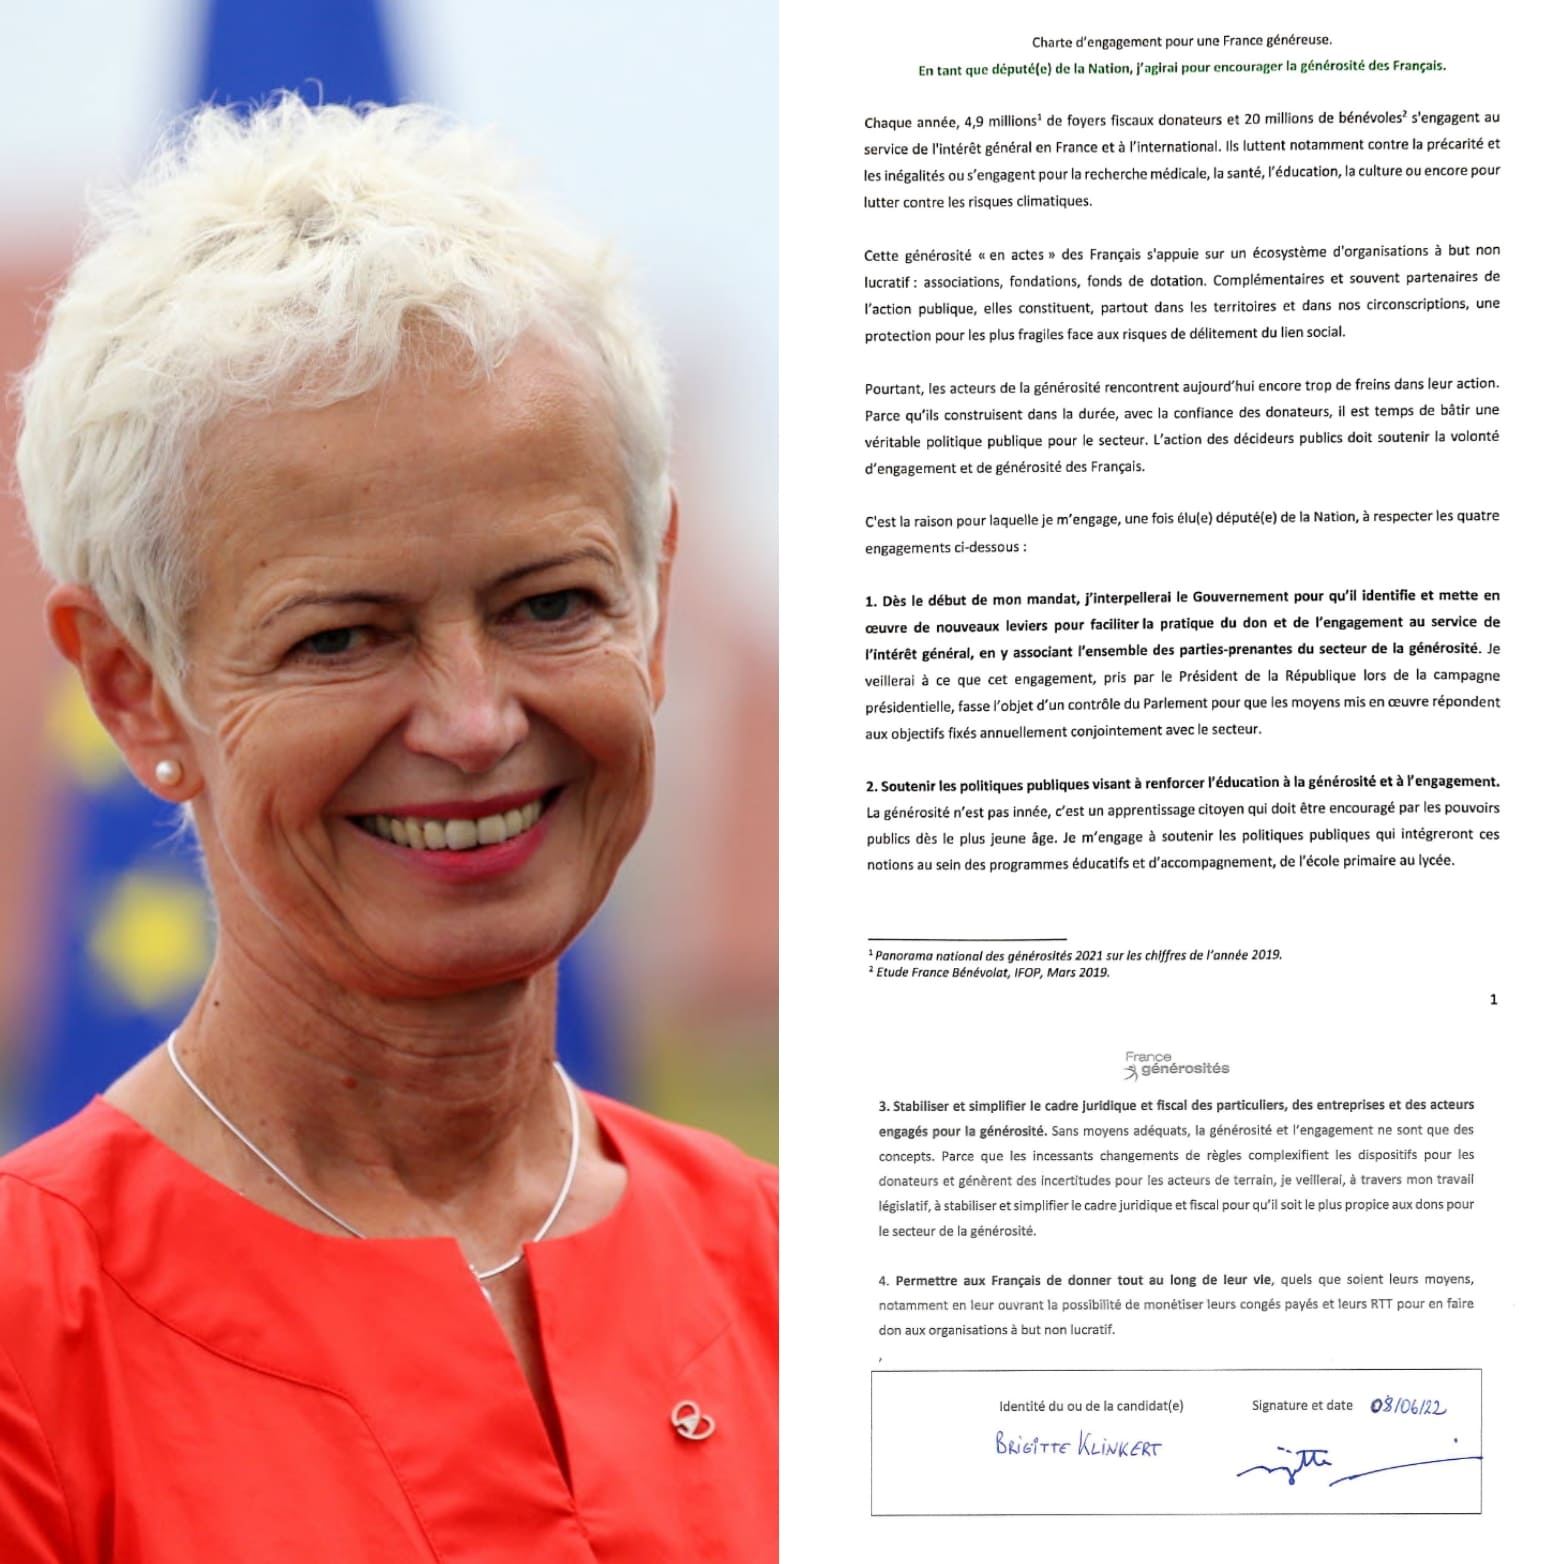 Charte d’engagement France généreuse - Brigitte klinkert